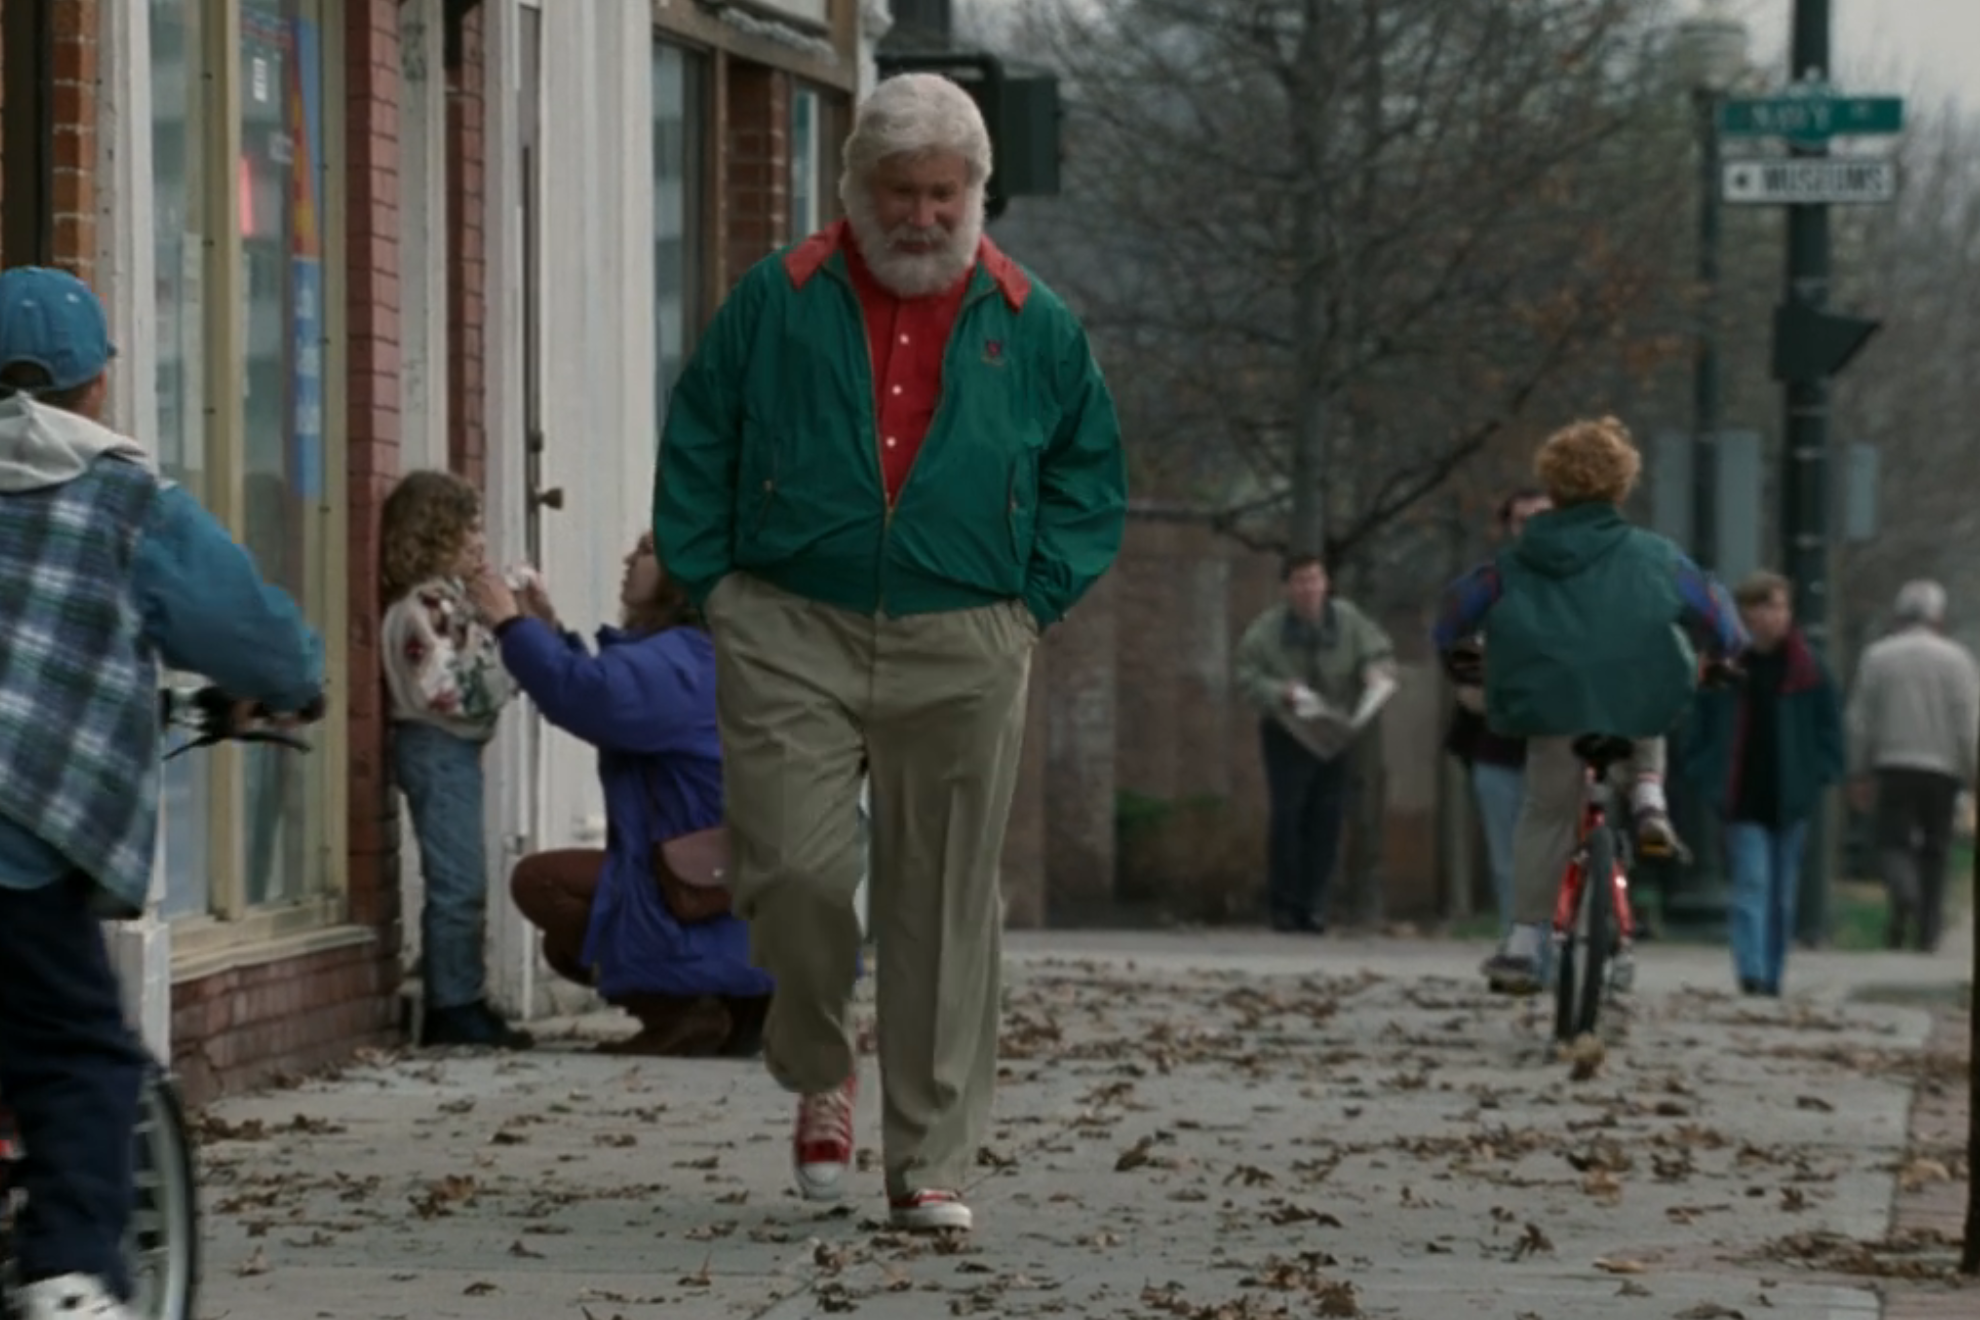 Screengrab of a scene in "The Santa Clause" film